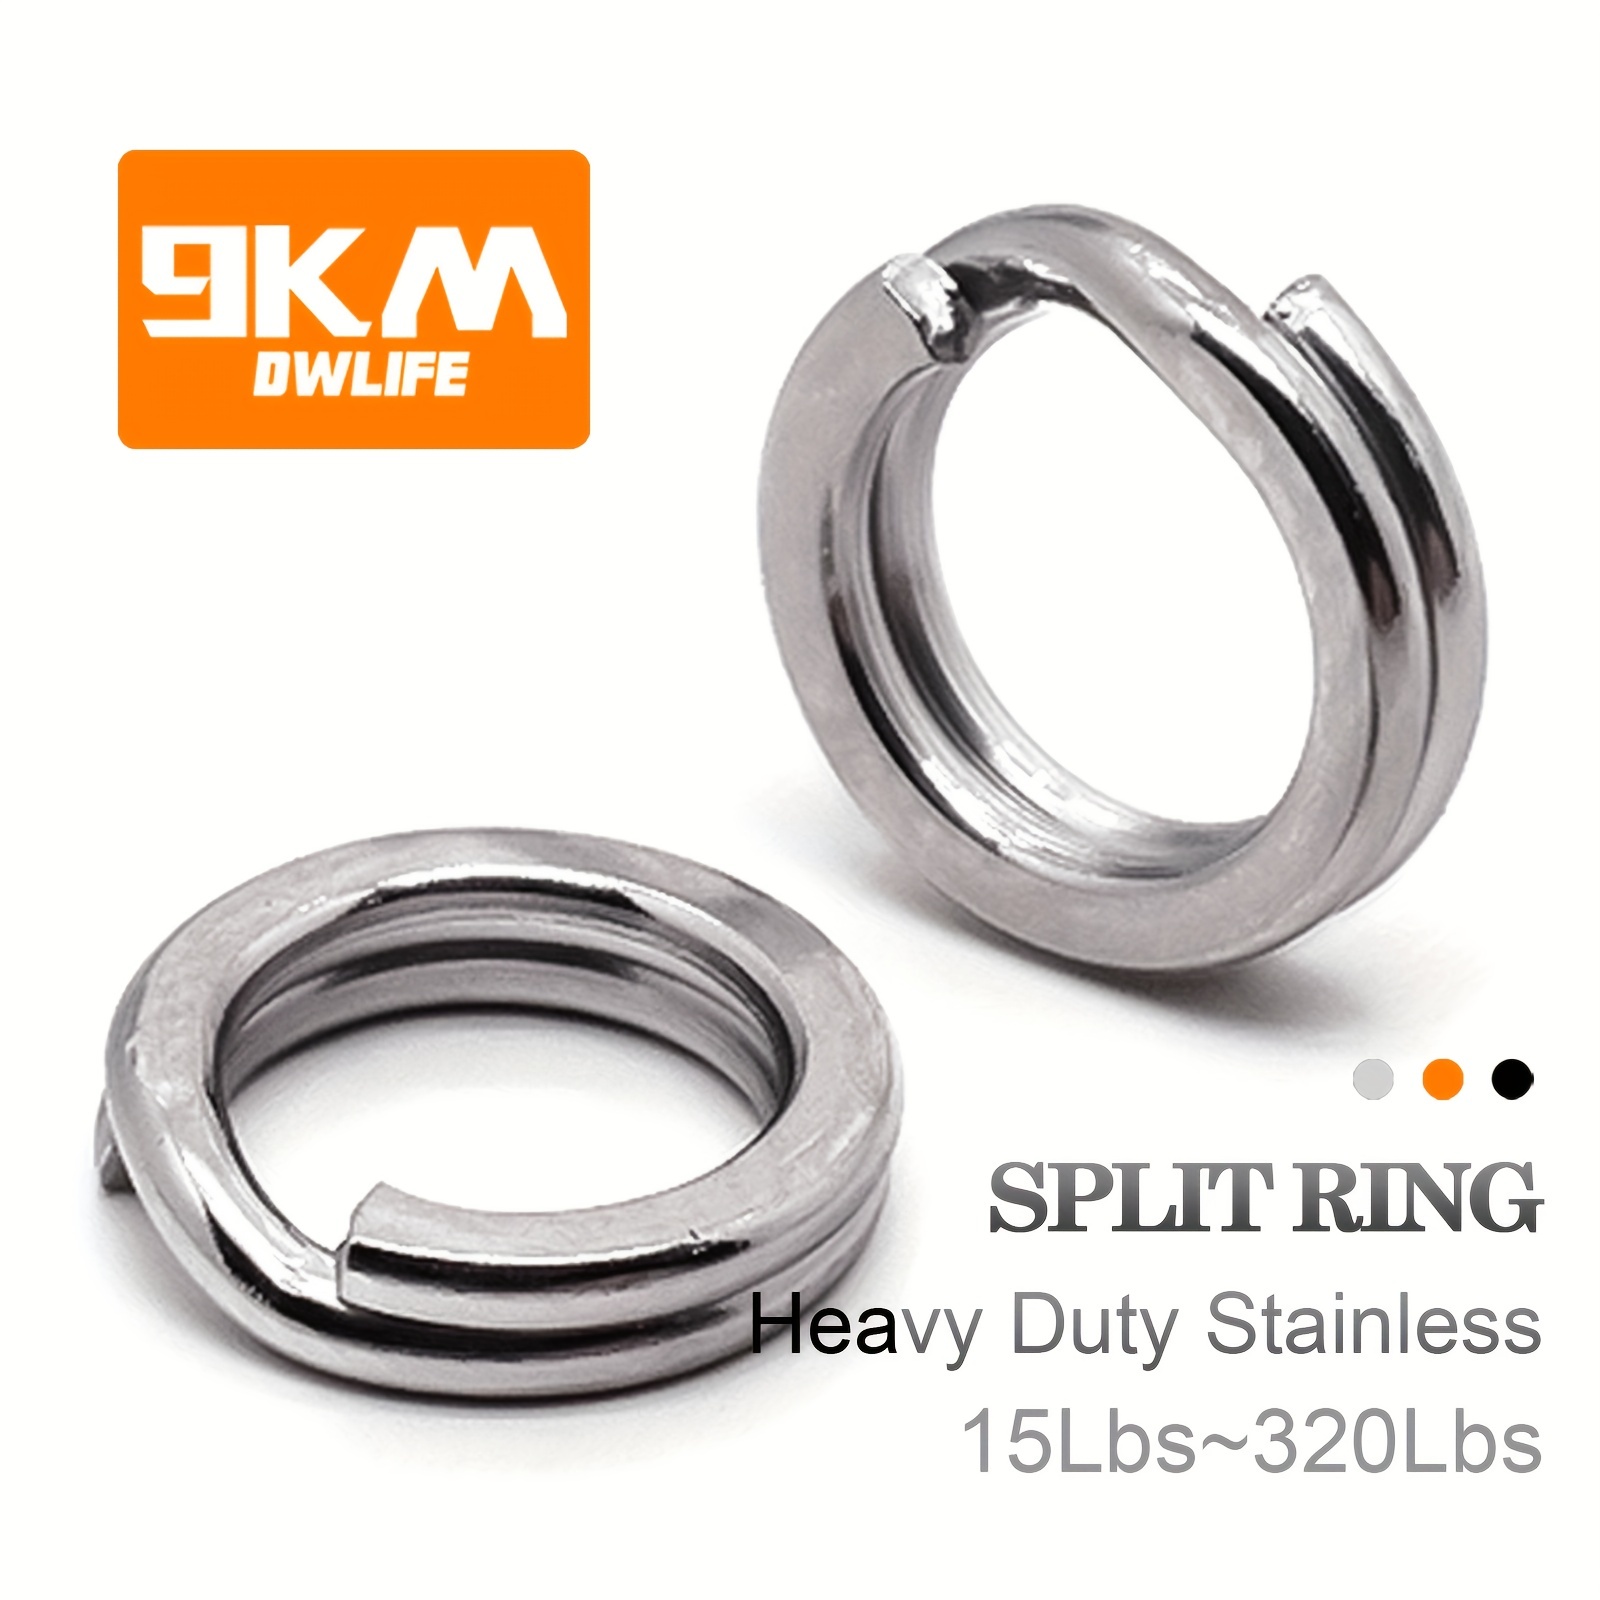 M&W Split Ring - Split rings